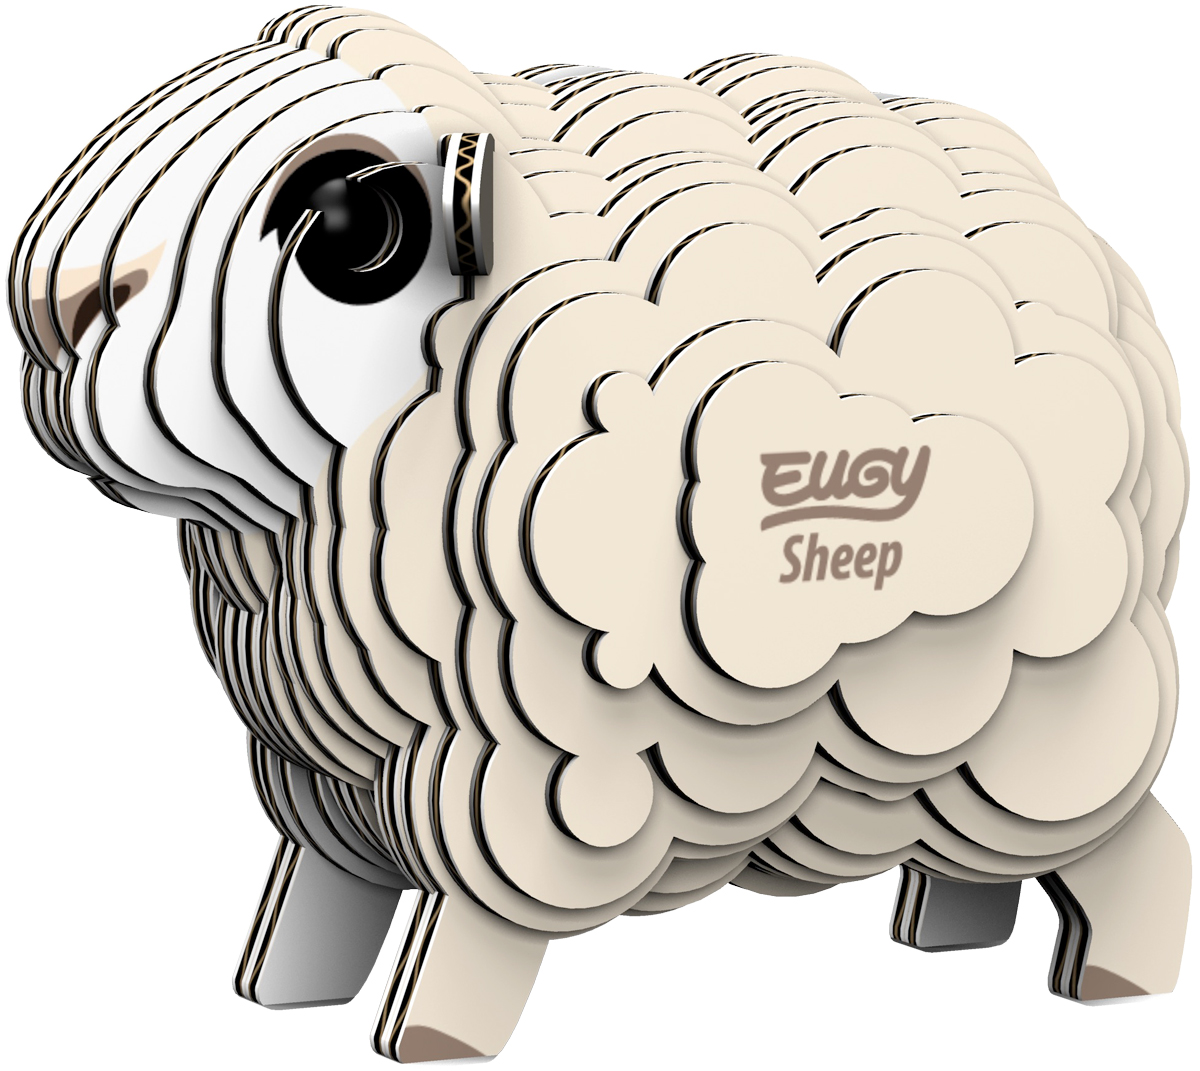 Sheep Eugy Animals 3D Puzzle